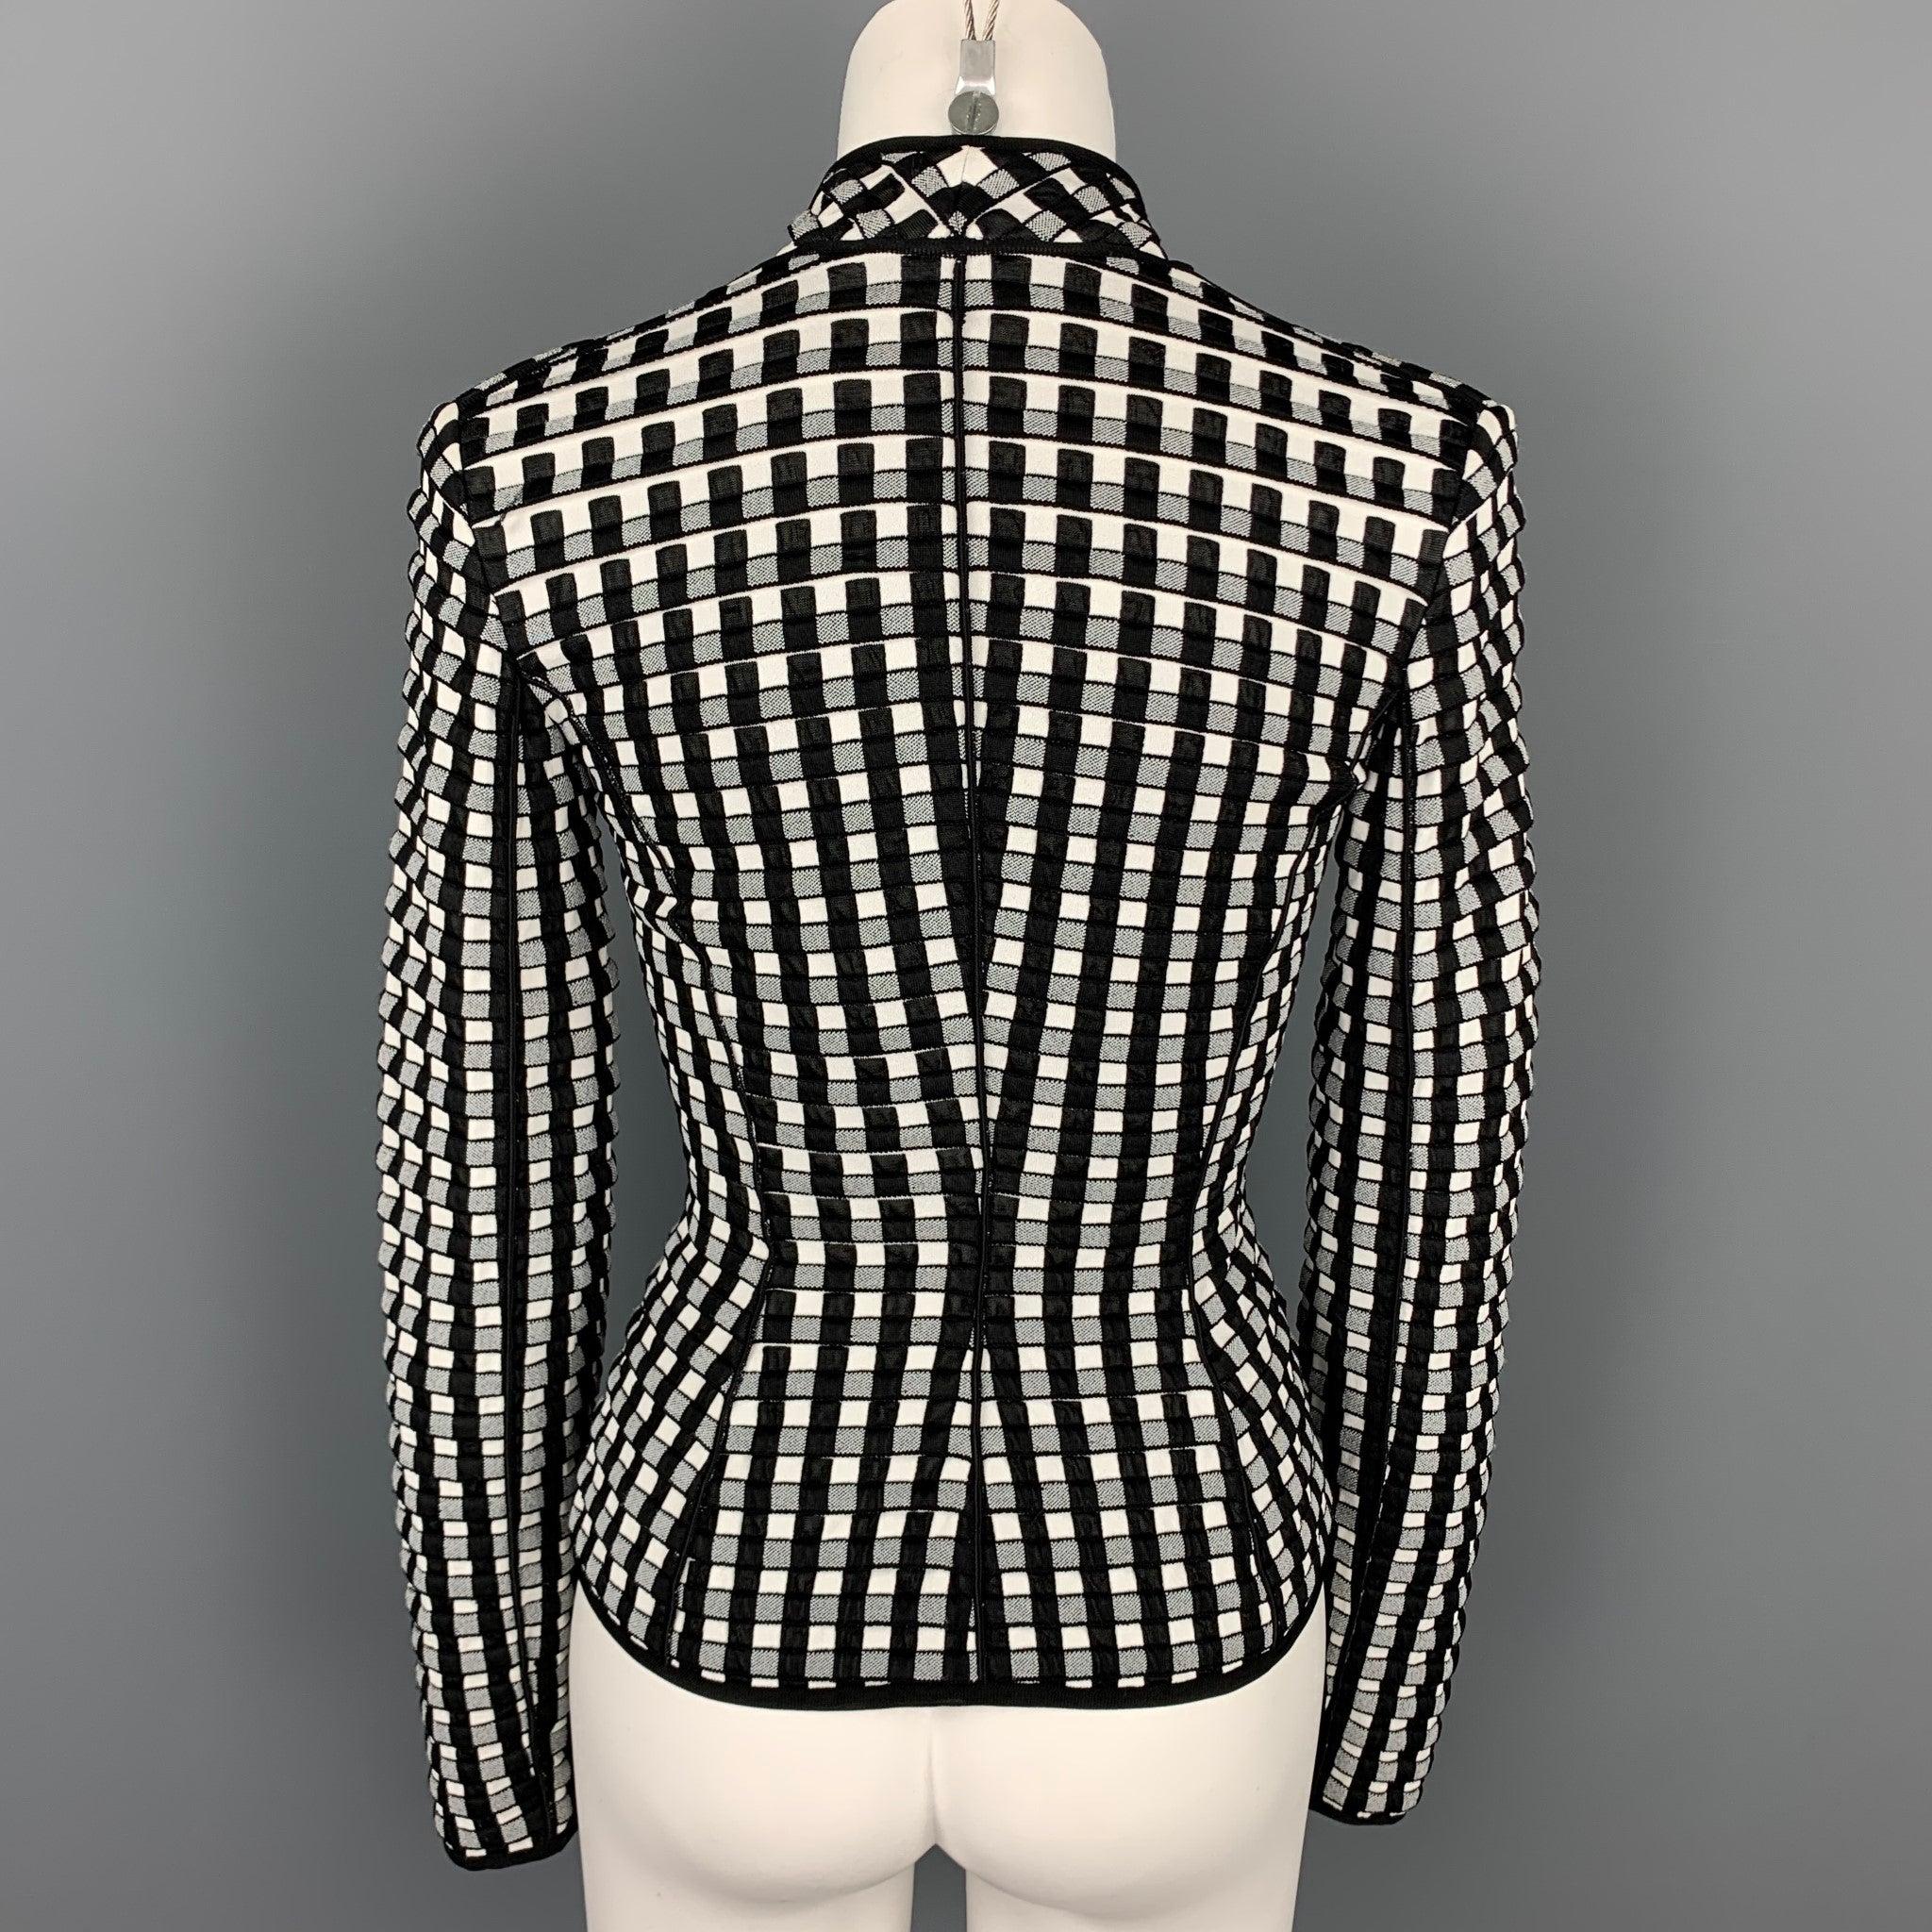 GIORGIO ARMANI Size 0 Black & White Textured Viscose Blend Jacket Blazer In Good Condition For Sale In San Francisco, CA